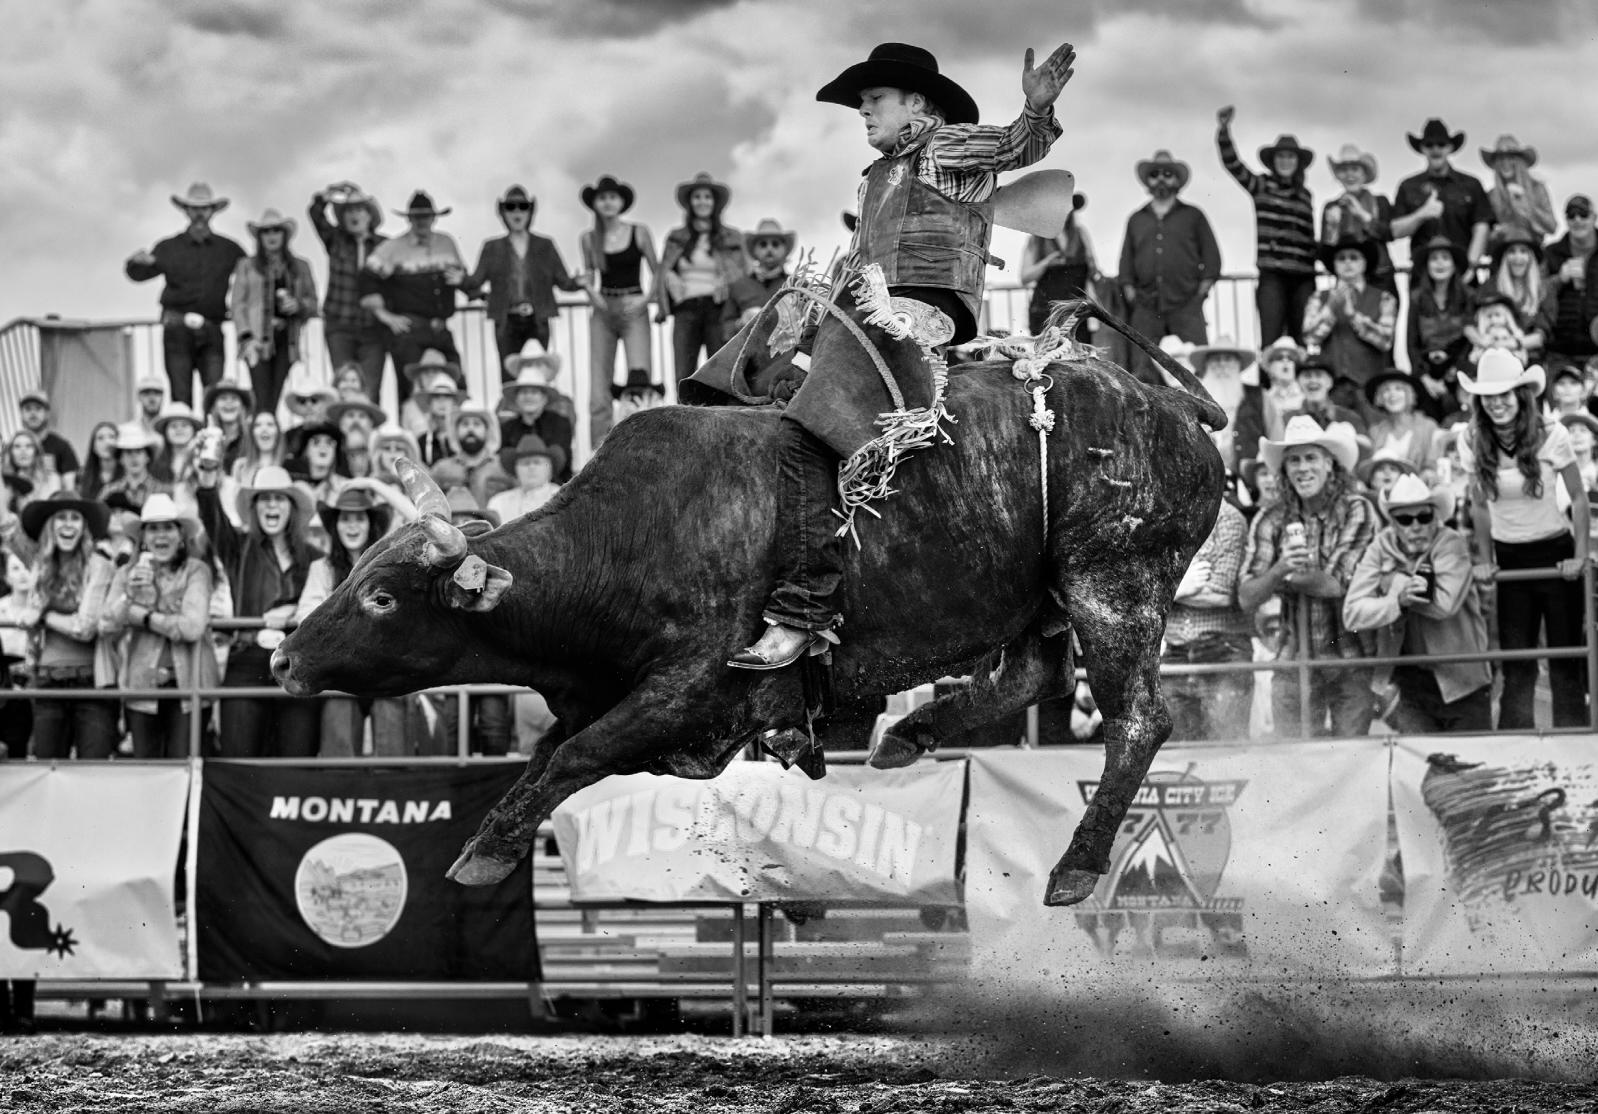 David Yarrow Black and White Photograph - Ride the Bull